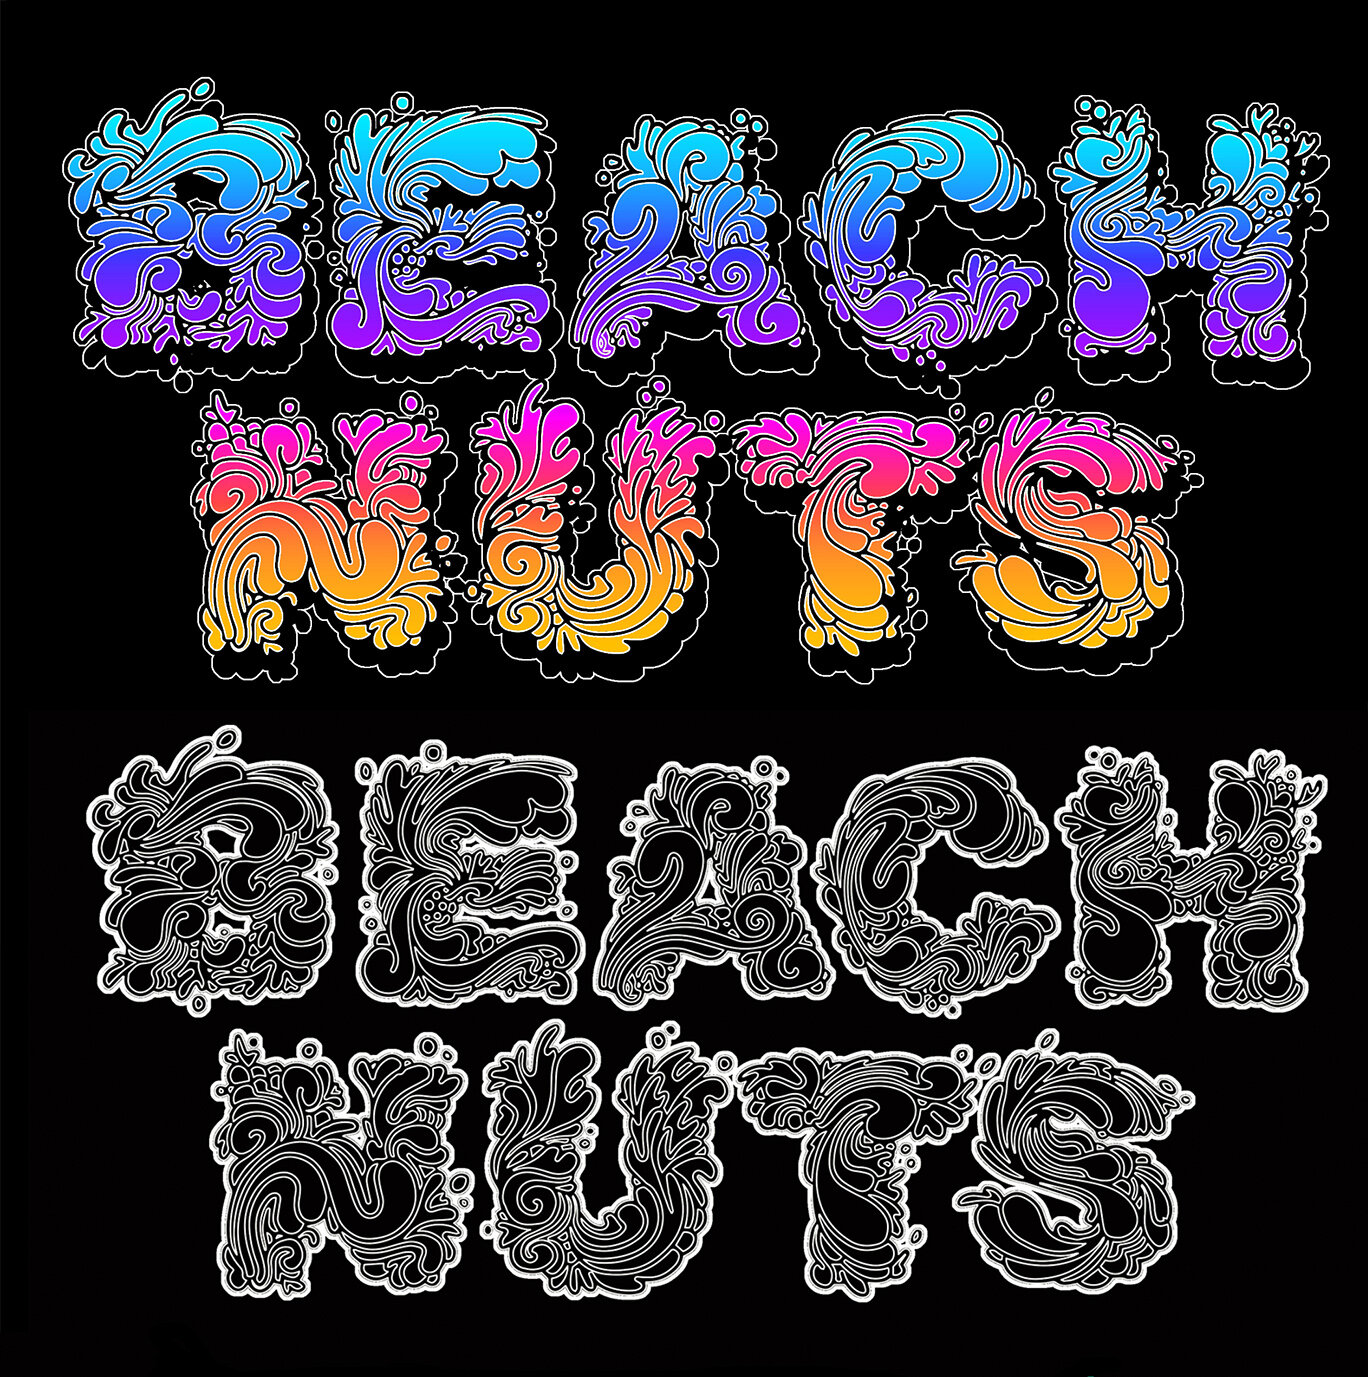 Beach Nuts